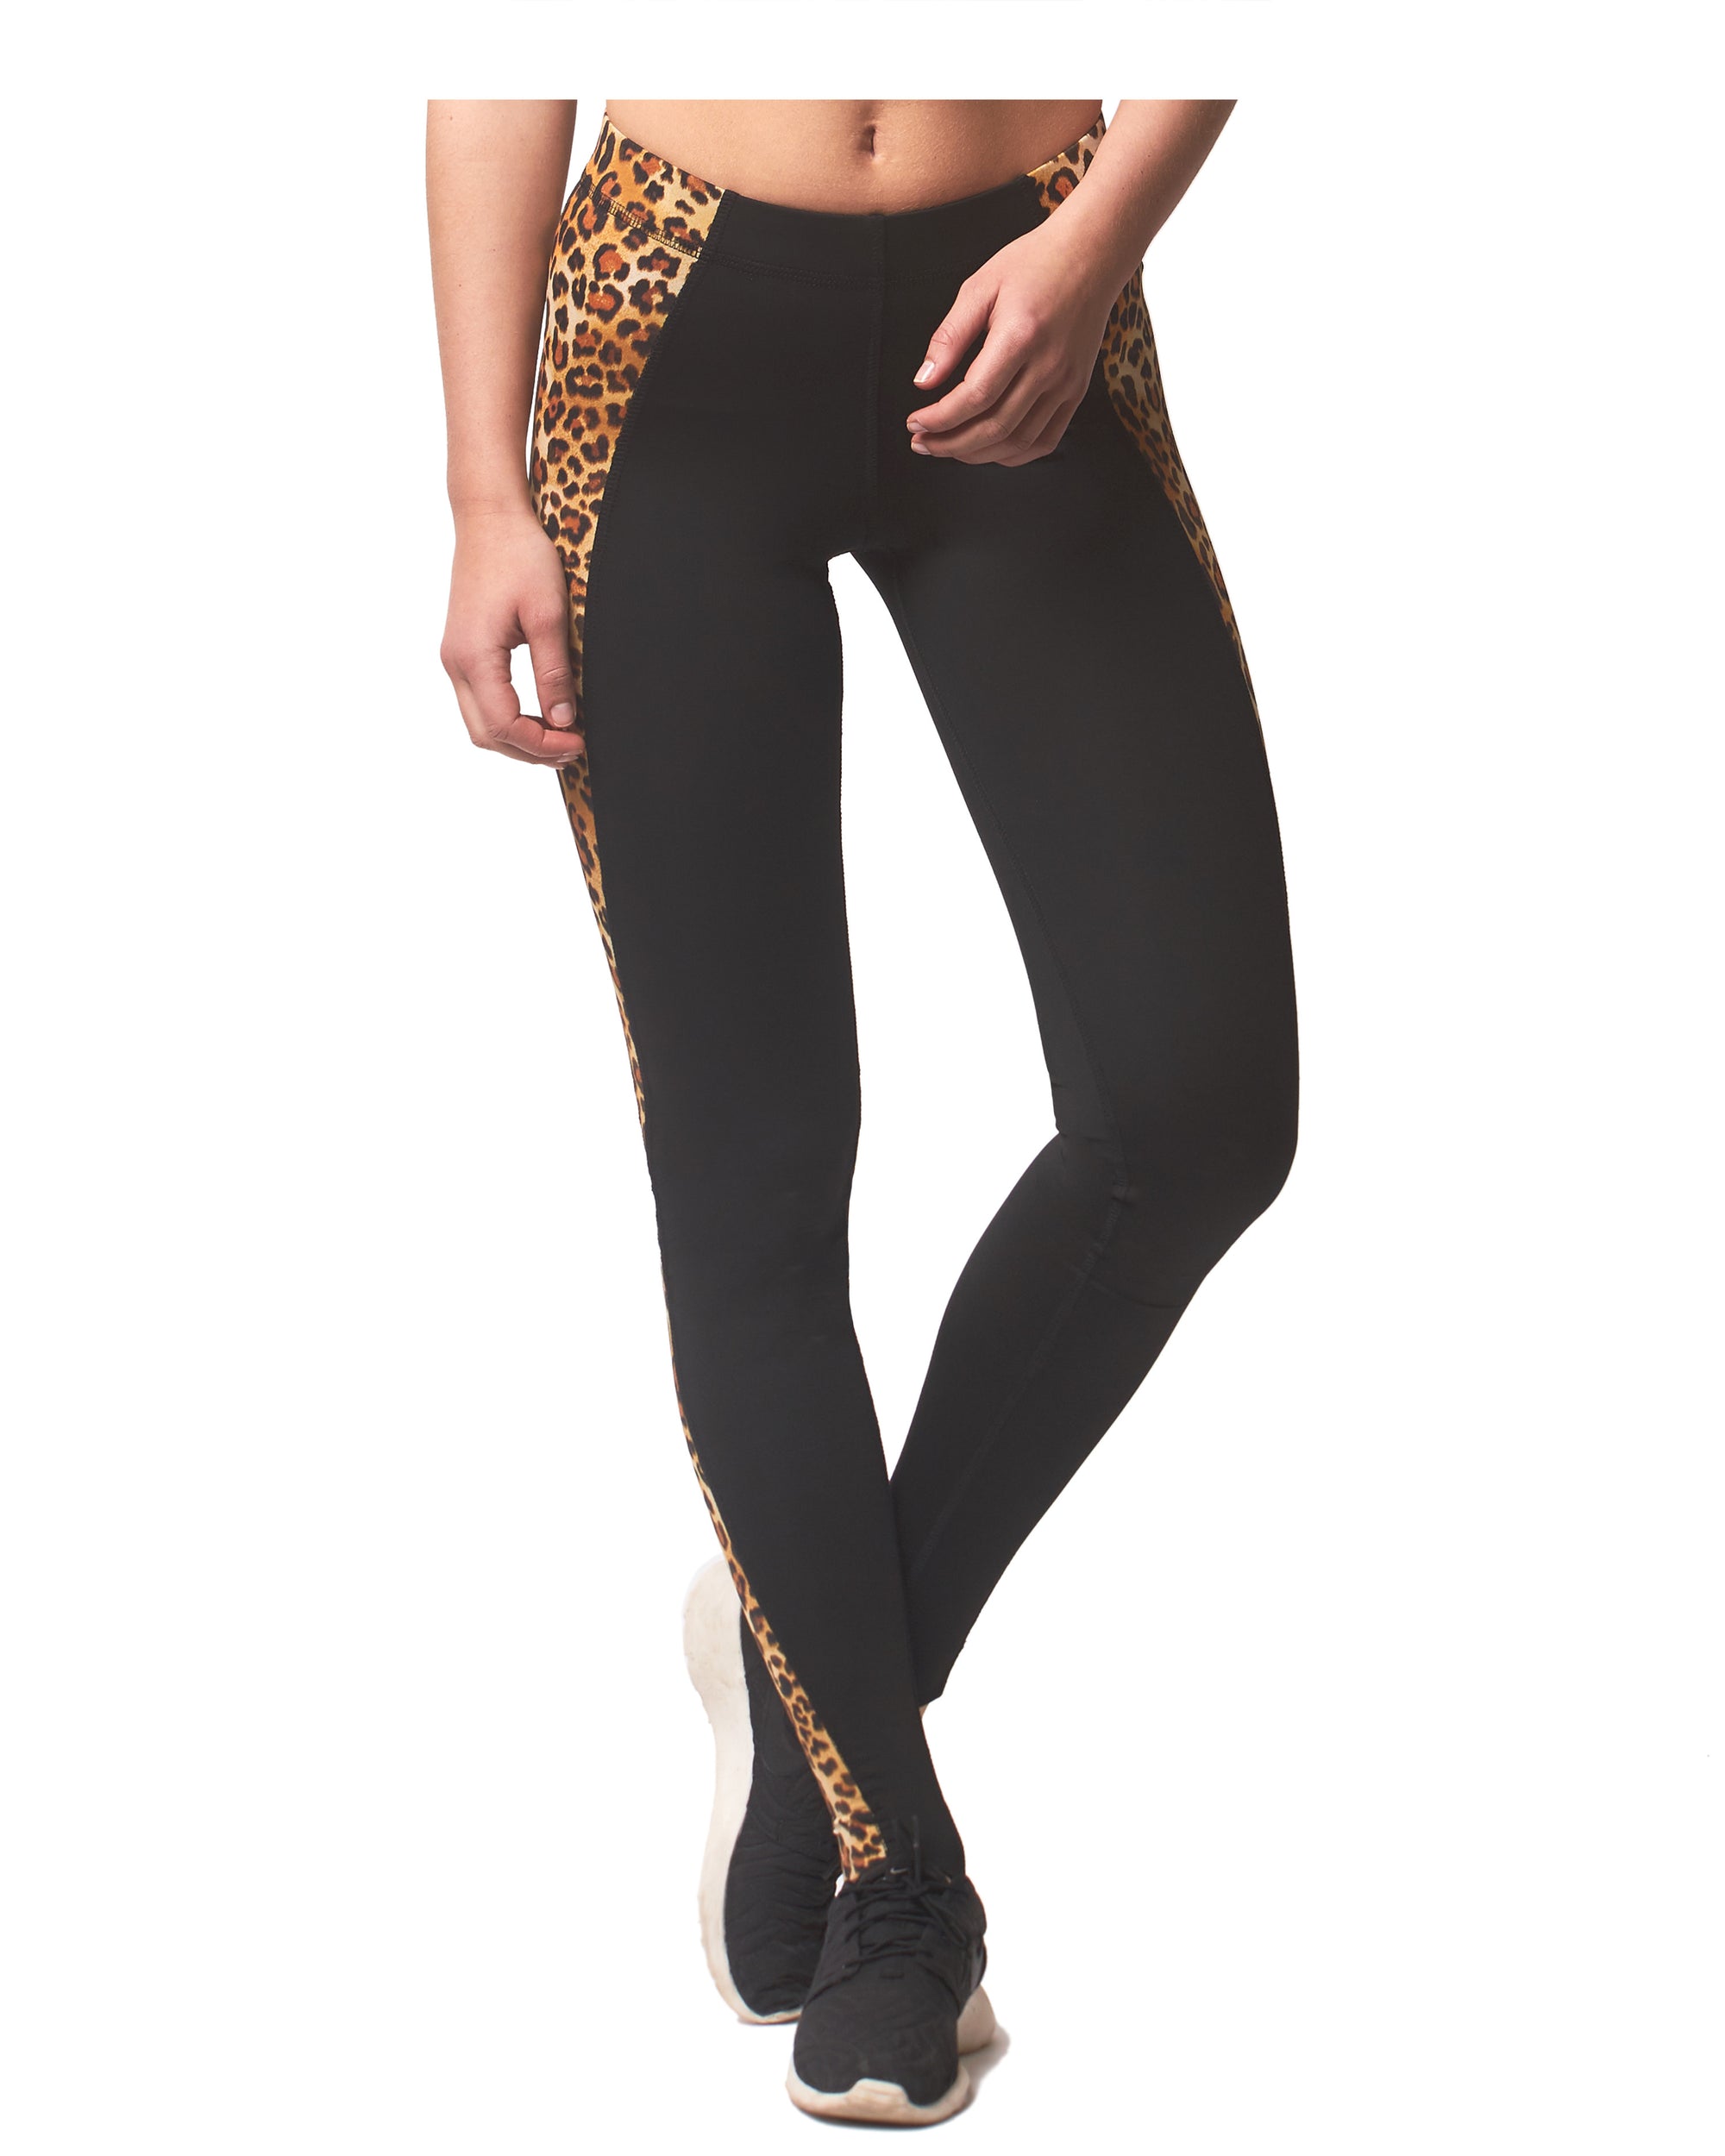 Nike One Tight Fit High Rise Leggings Black Gray Leopard Print Size XS $75